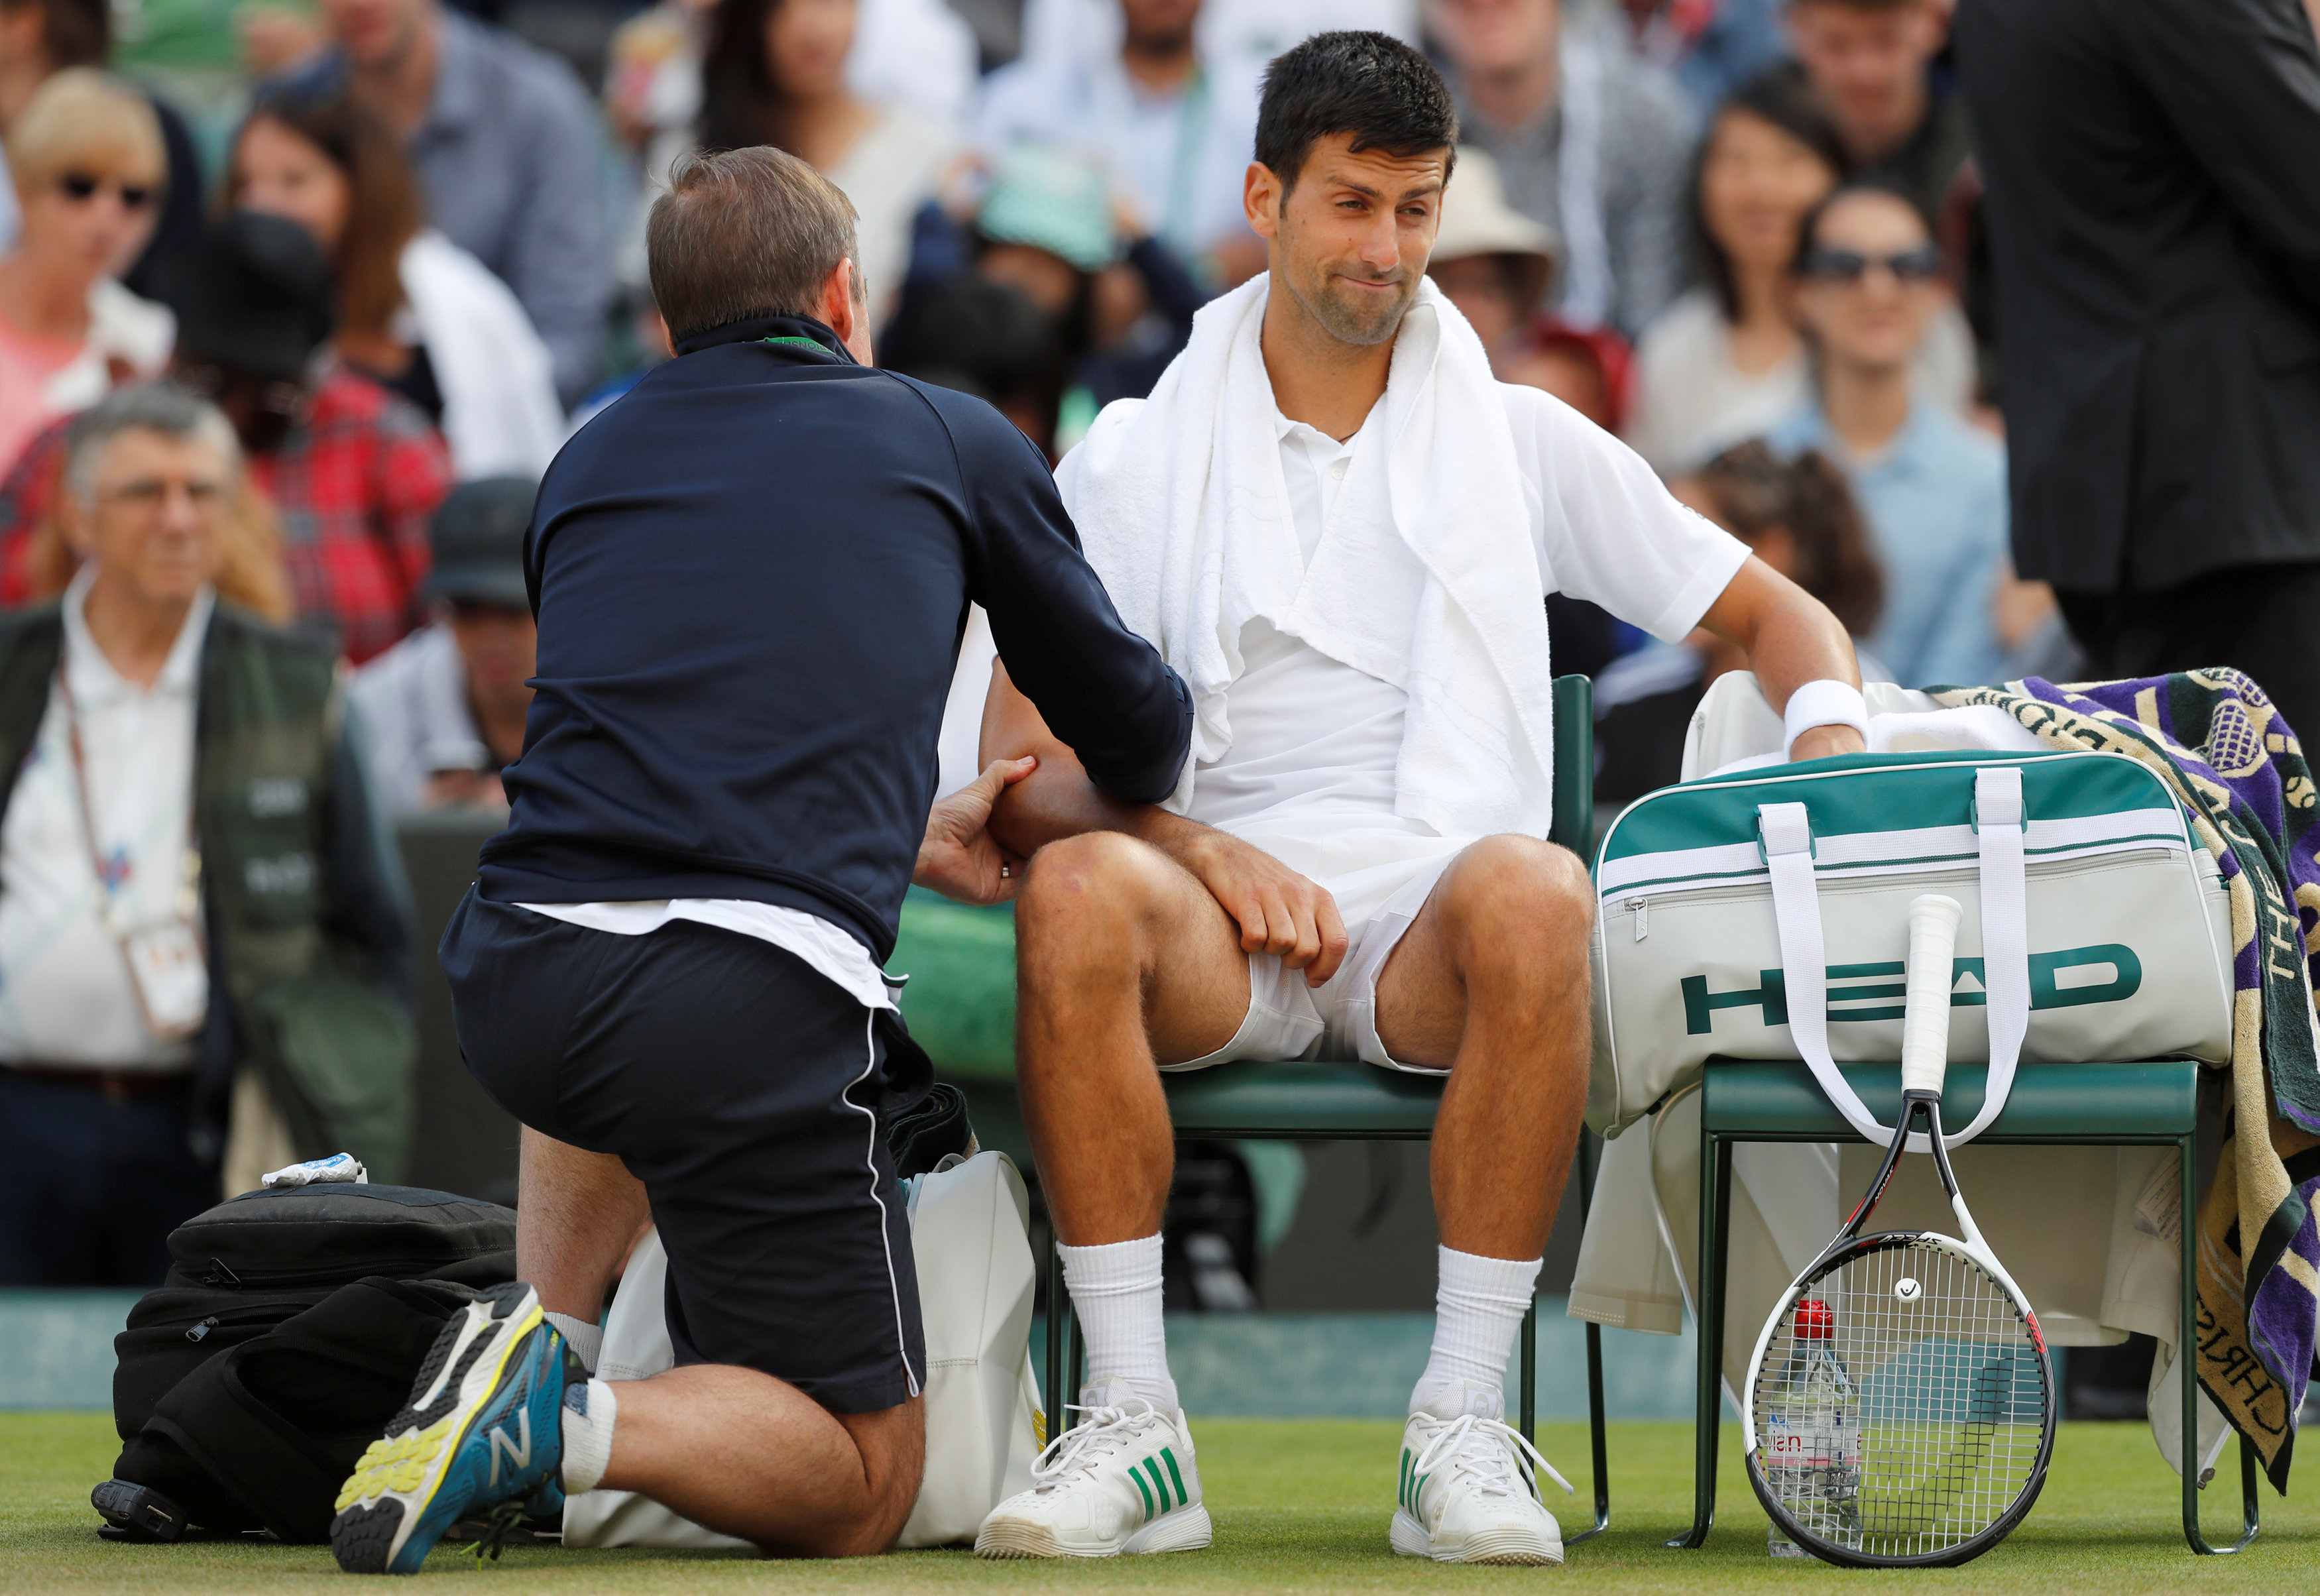 Tennis: Djokovic retires hurt in Wimbledon quarterfinal against Berdych